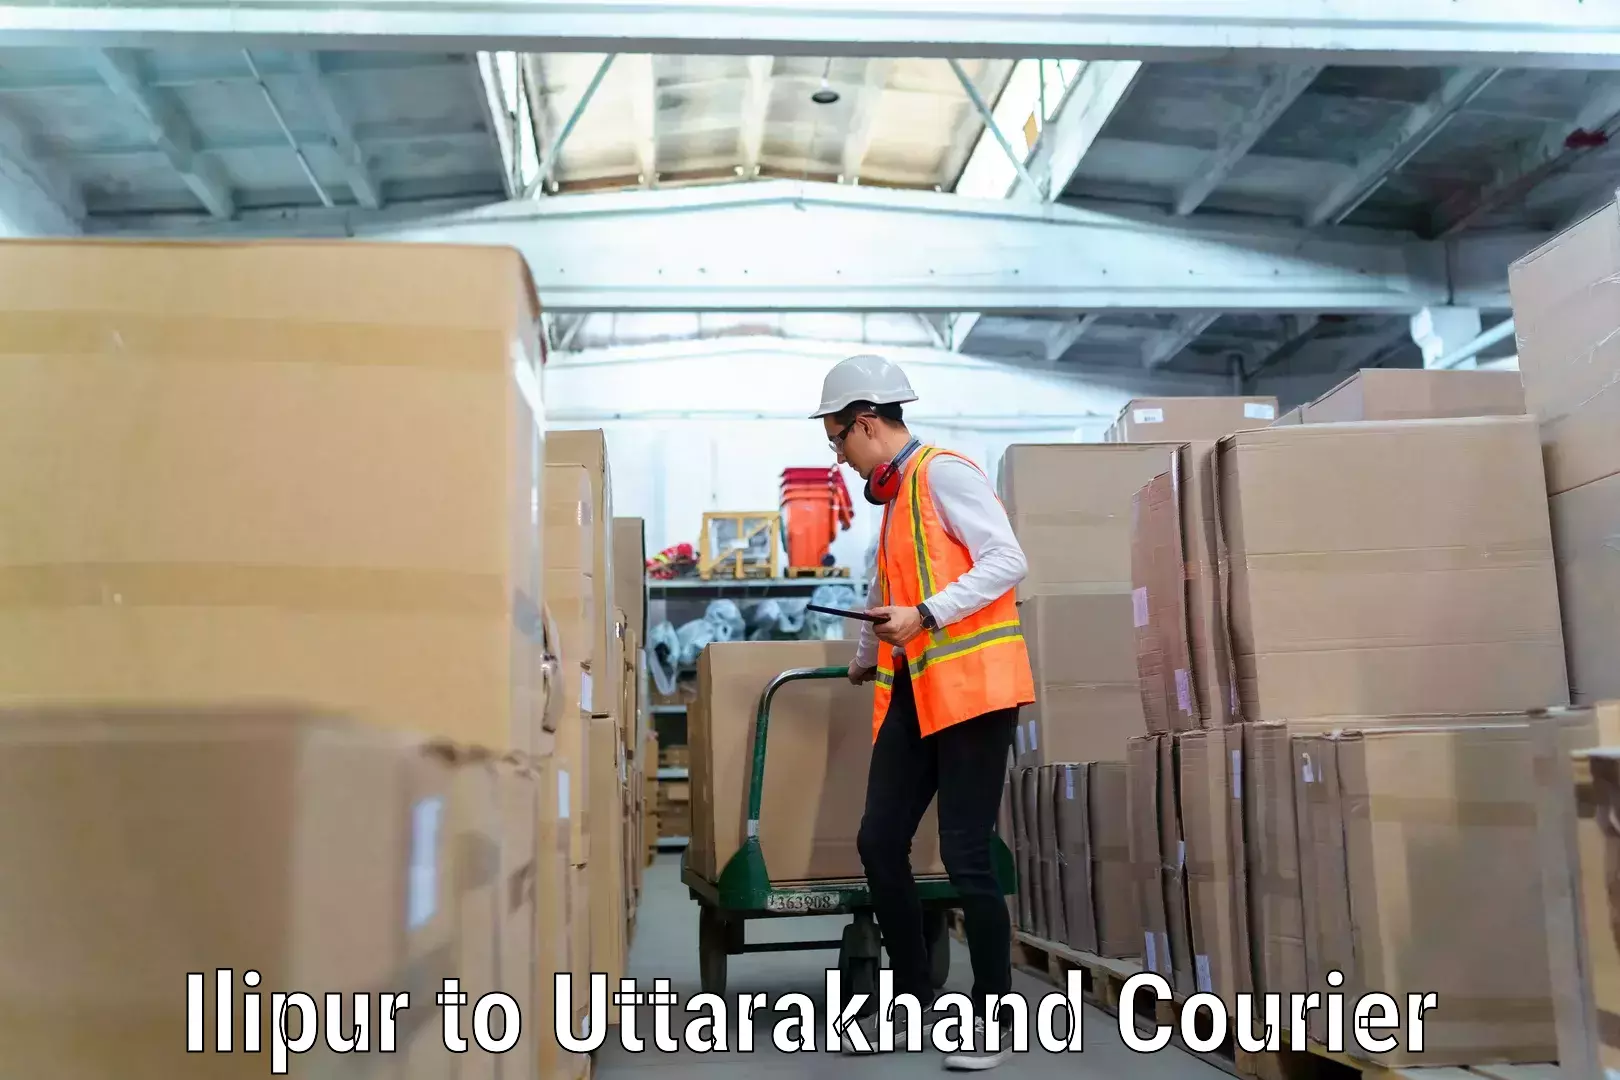 Household moving experts Ilipur to Uttarakhand